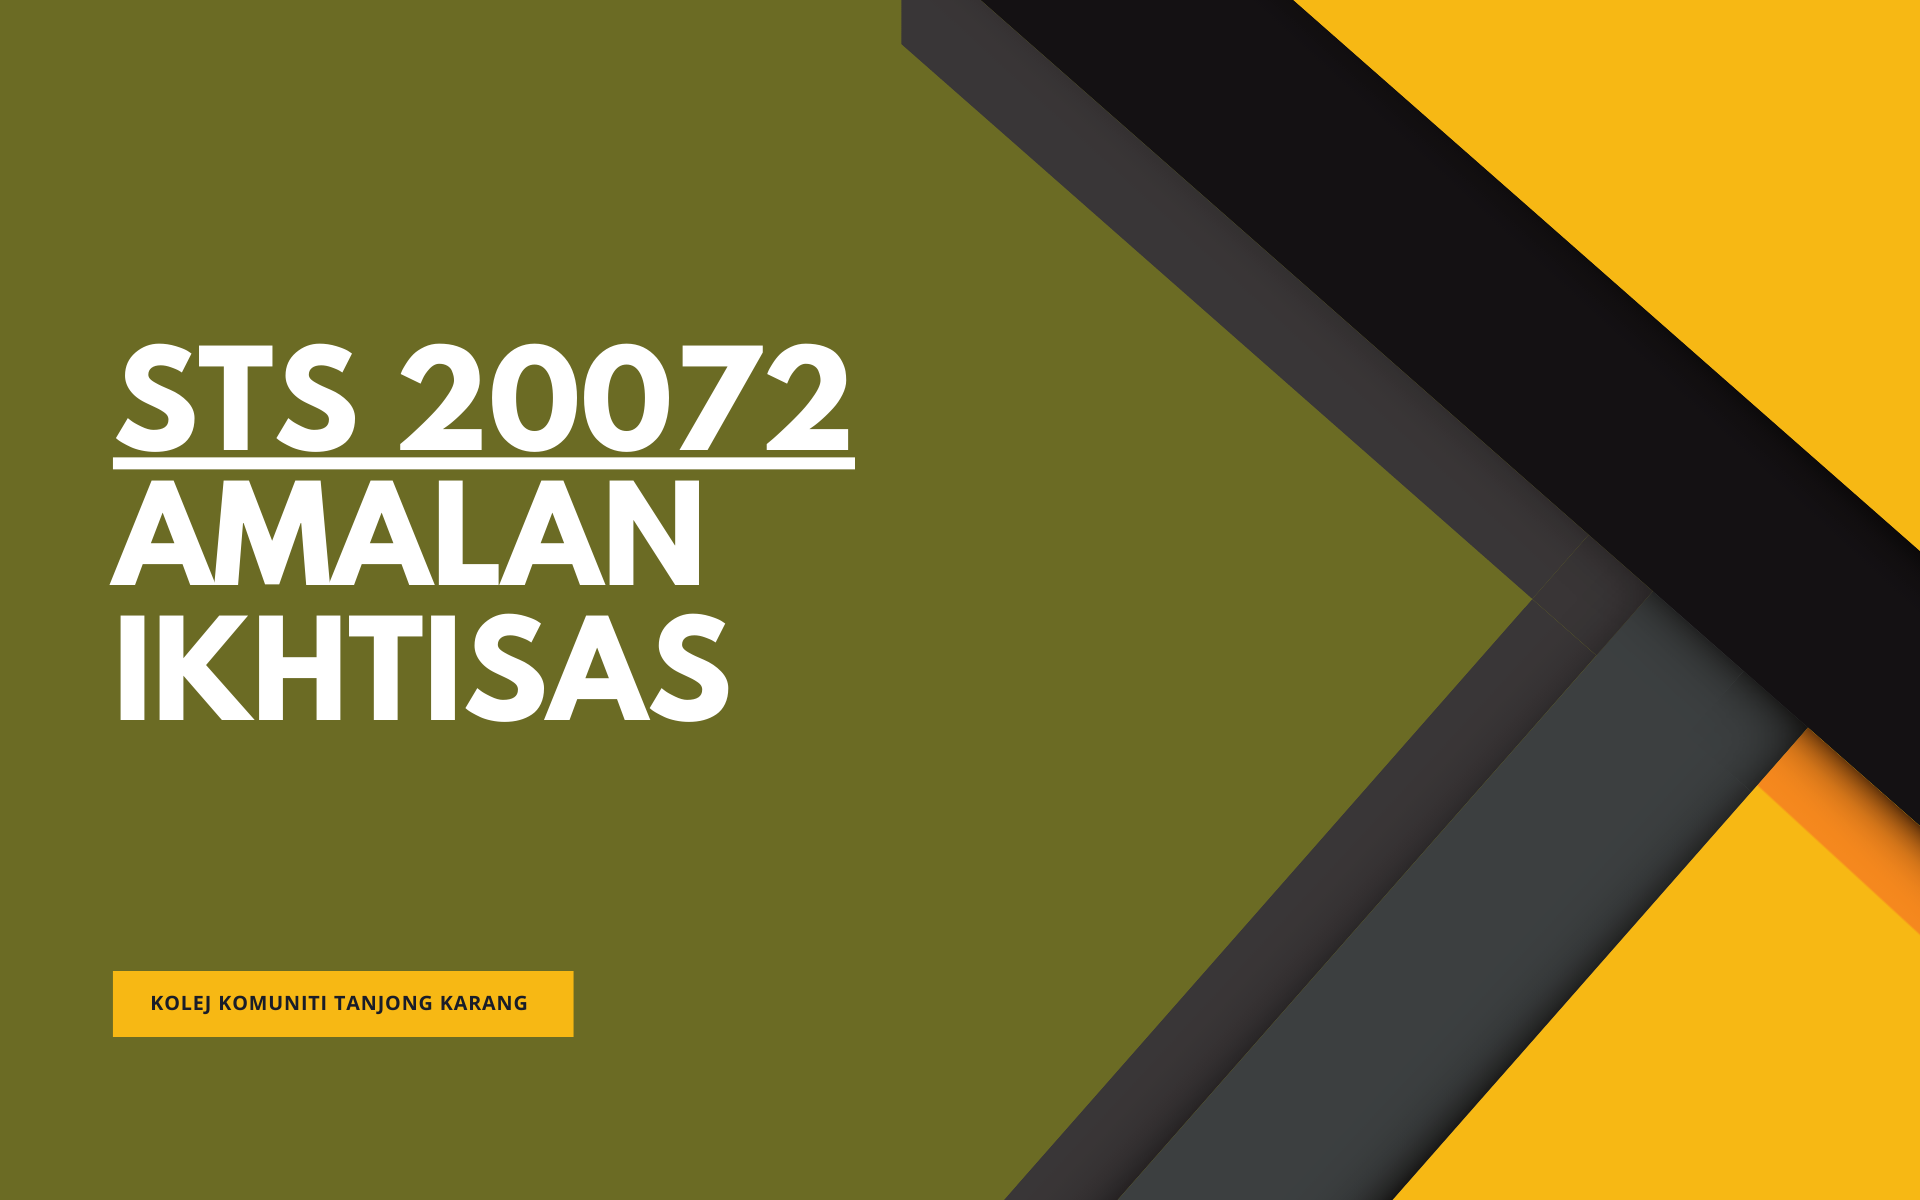 KKTK STS20072 AMALAN IKHTISAS